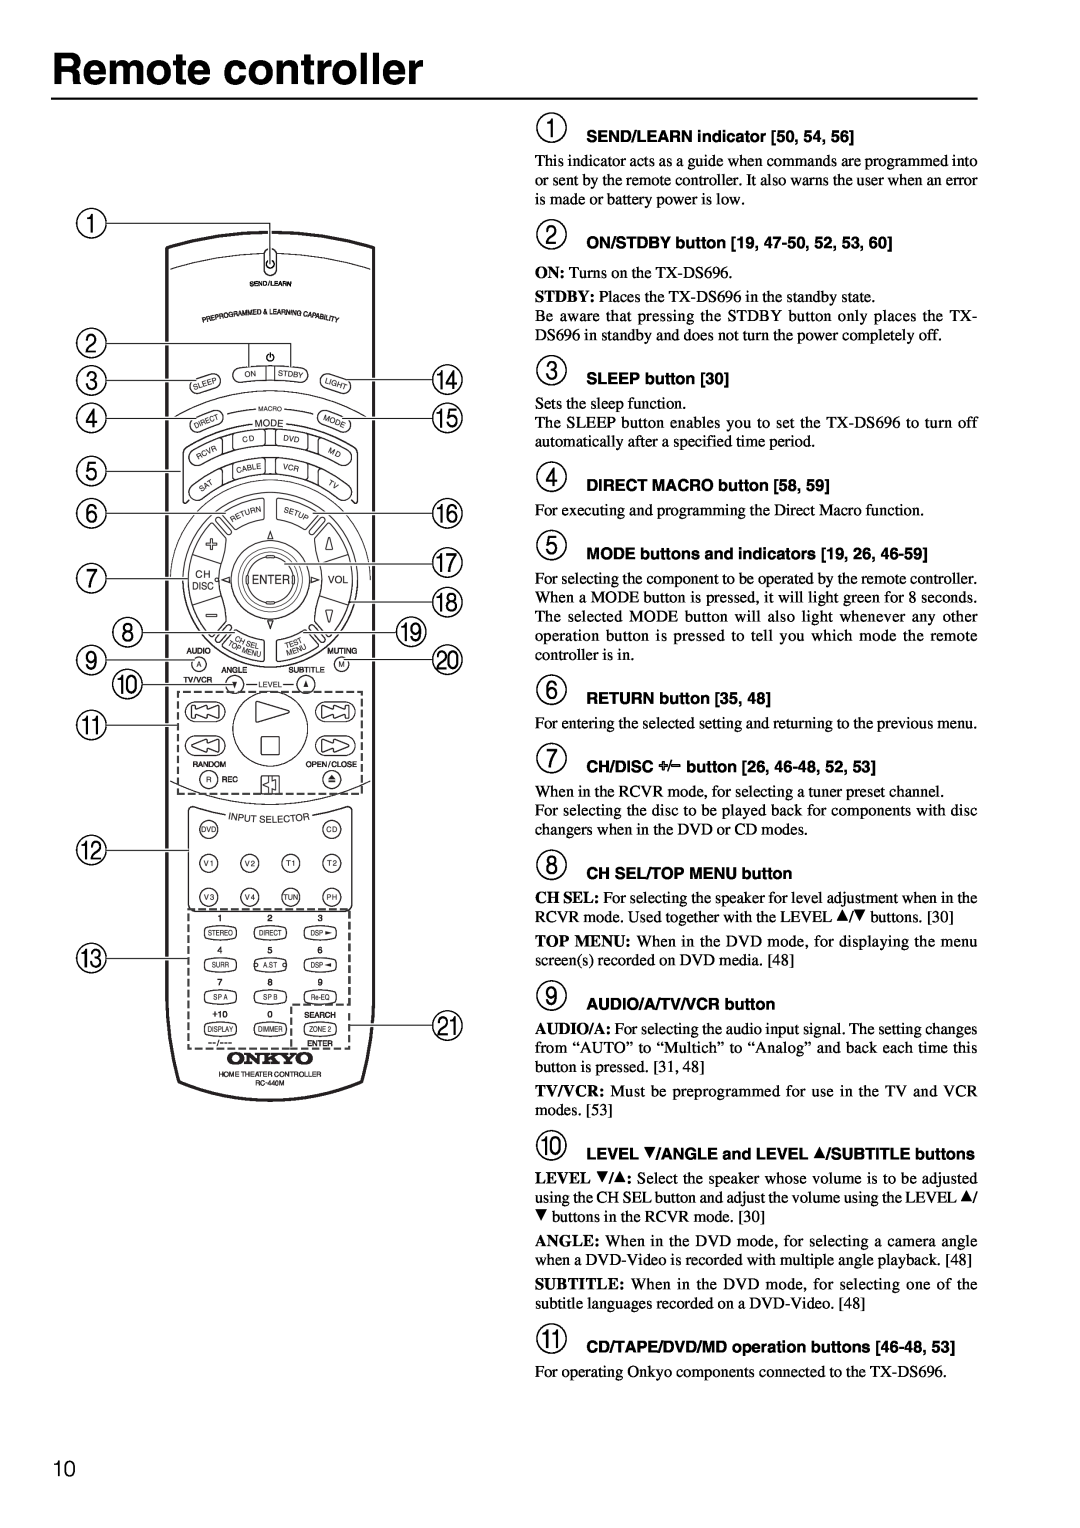 Onkyo TX-DS696 appendix Remote controller, 1 2 3 4 5 6 7 8 90 A B C 